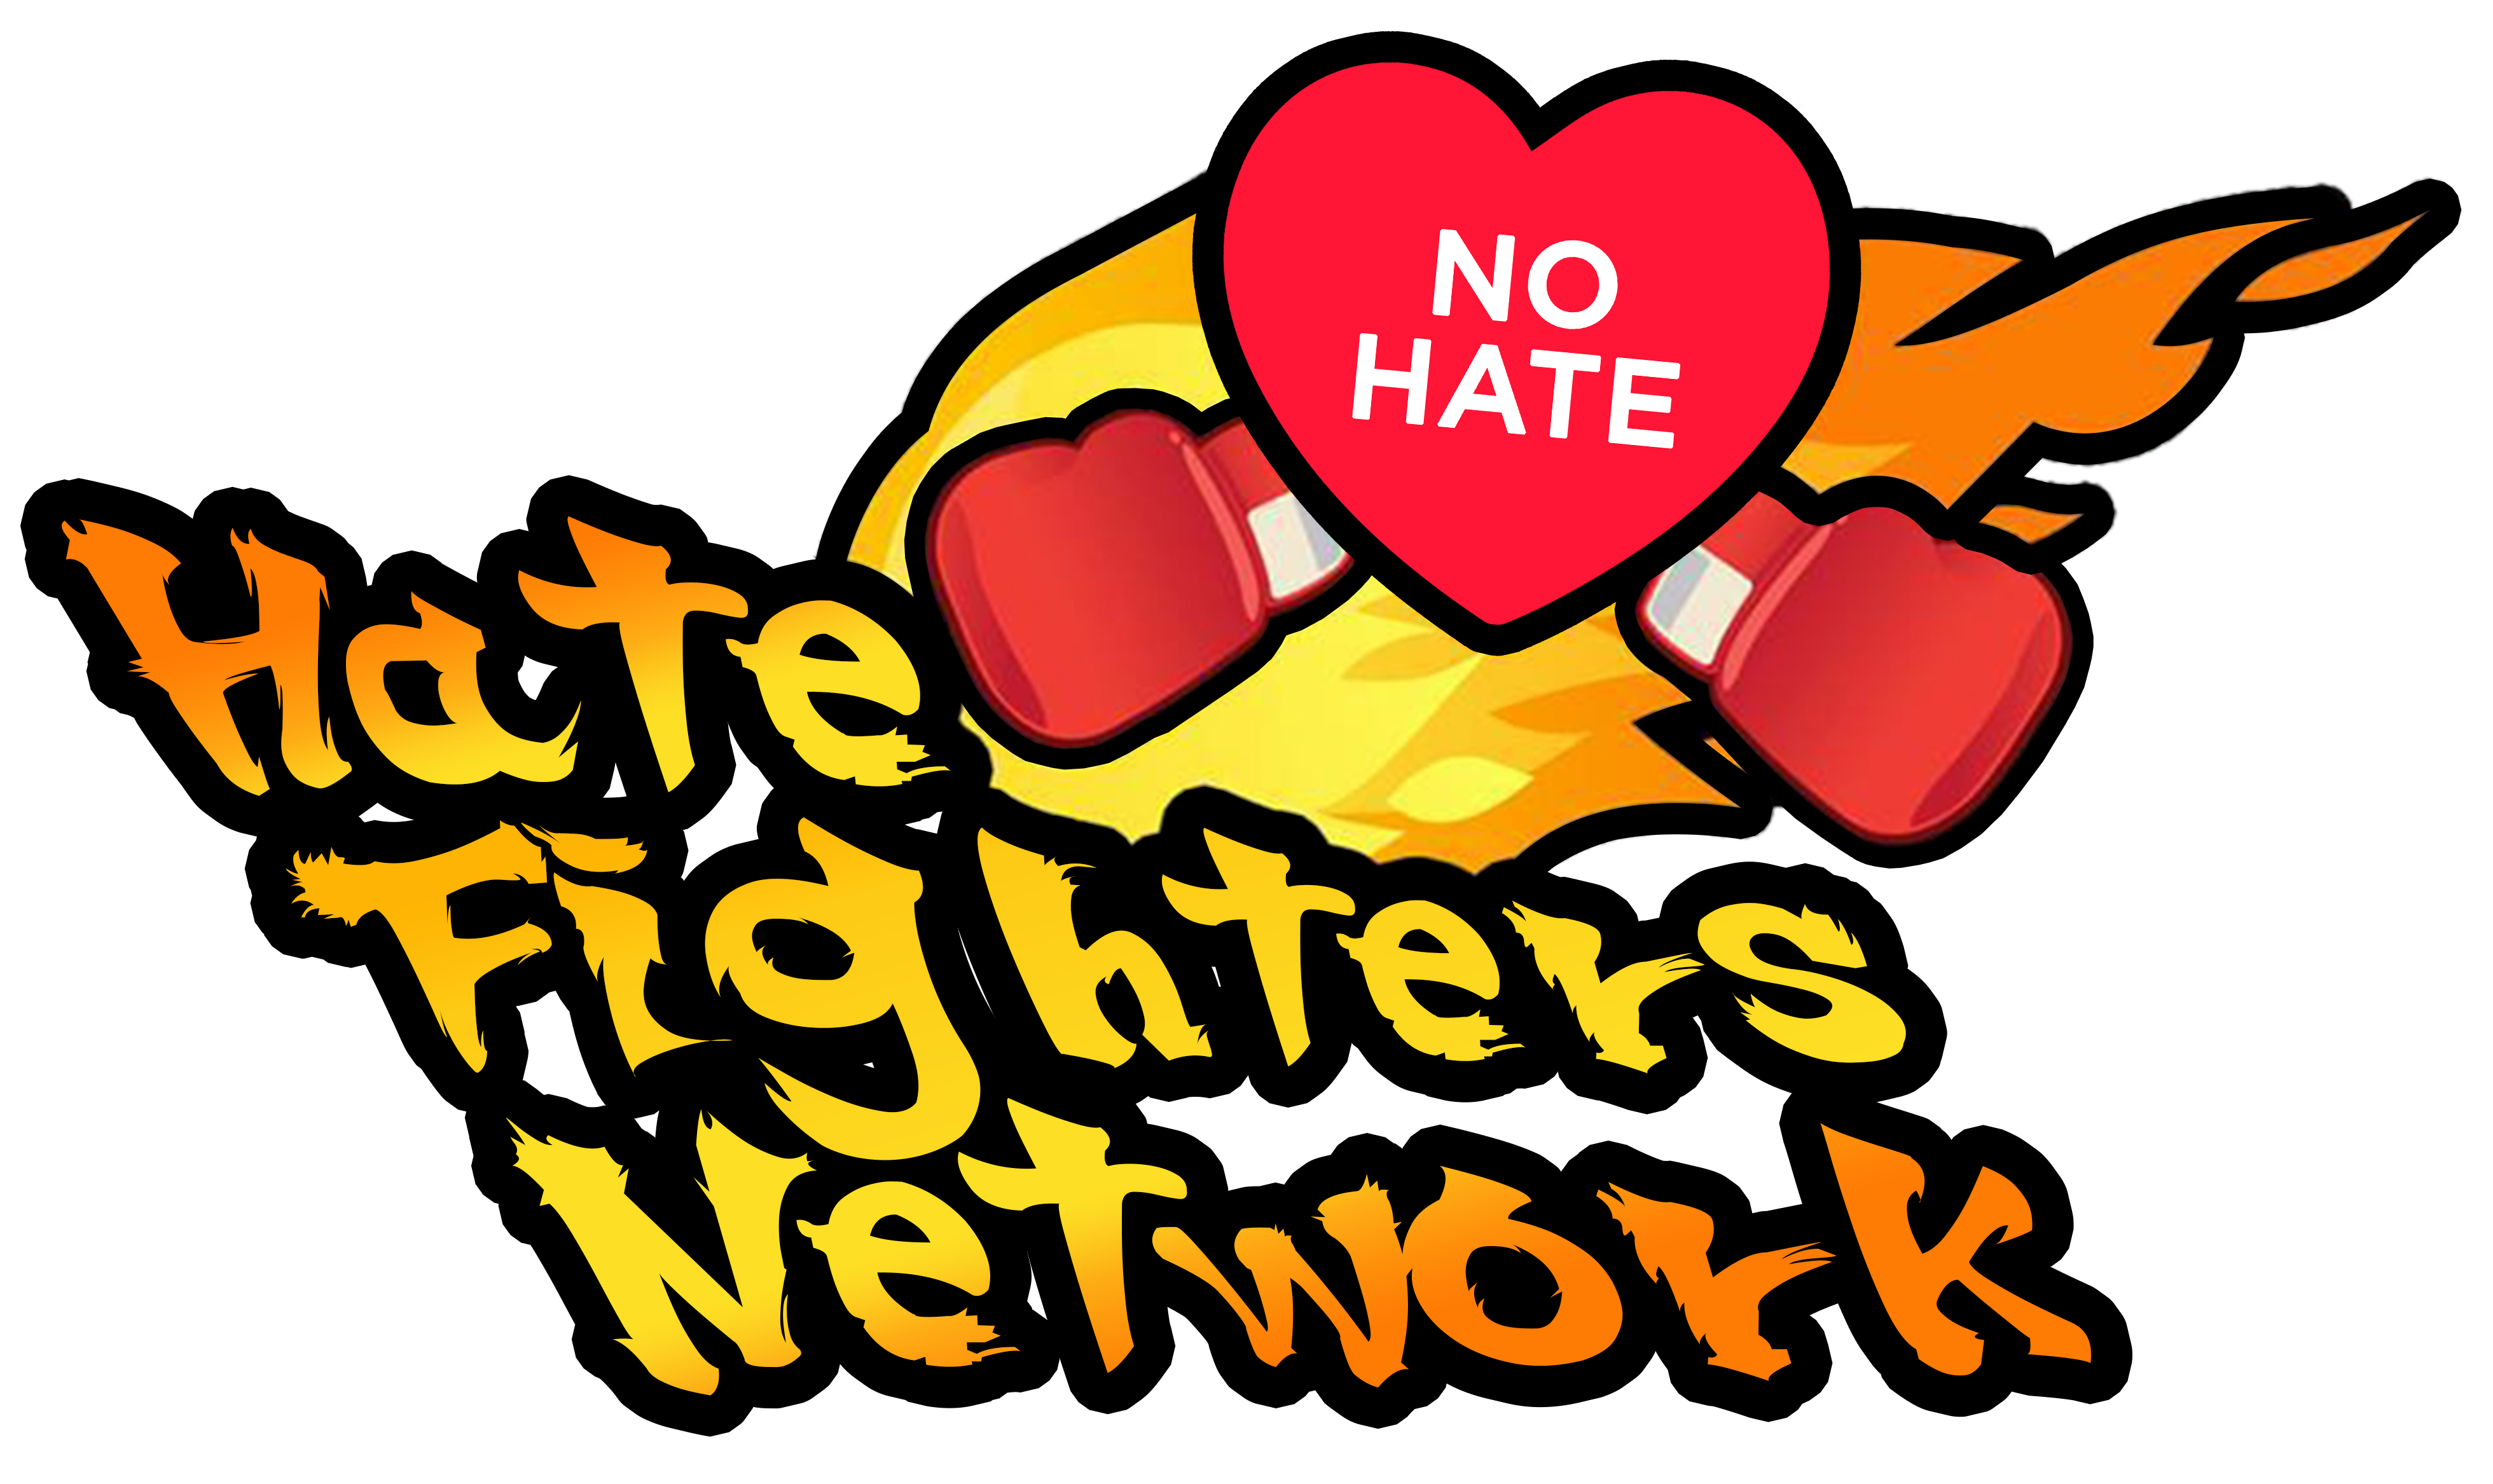 Beyond Borders aderisce al Network Hate Fighters